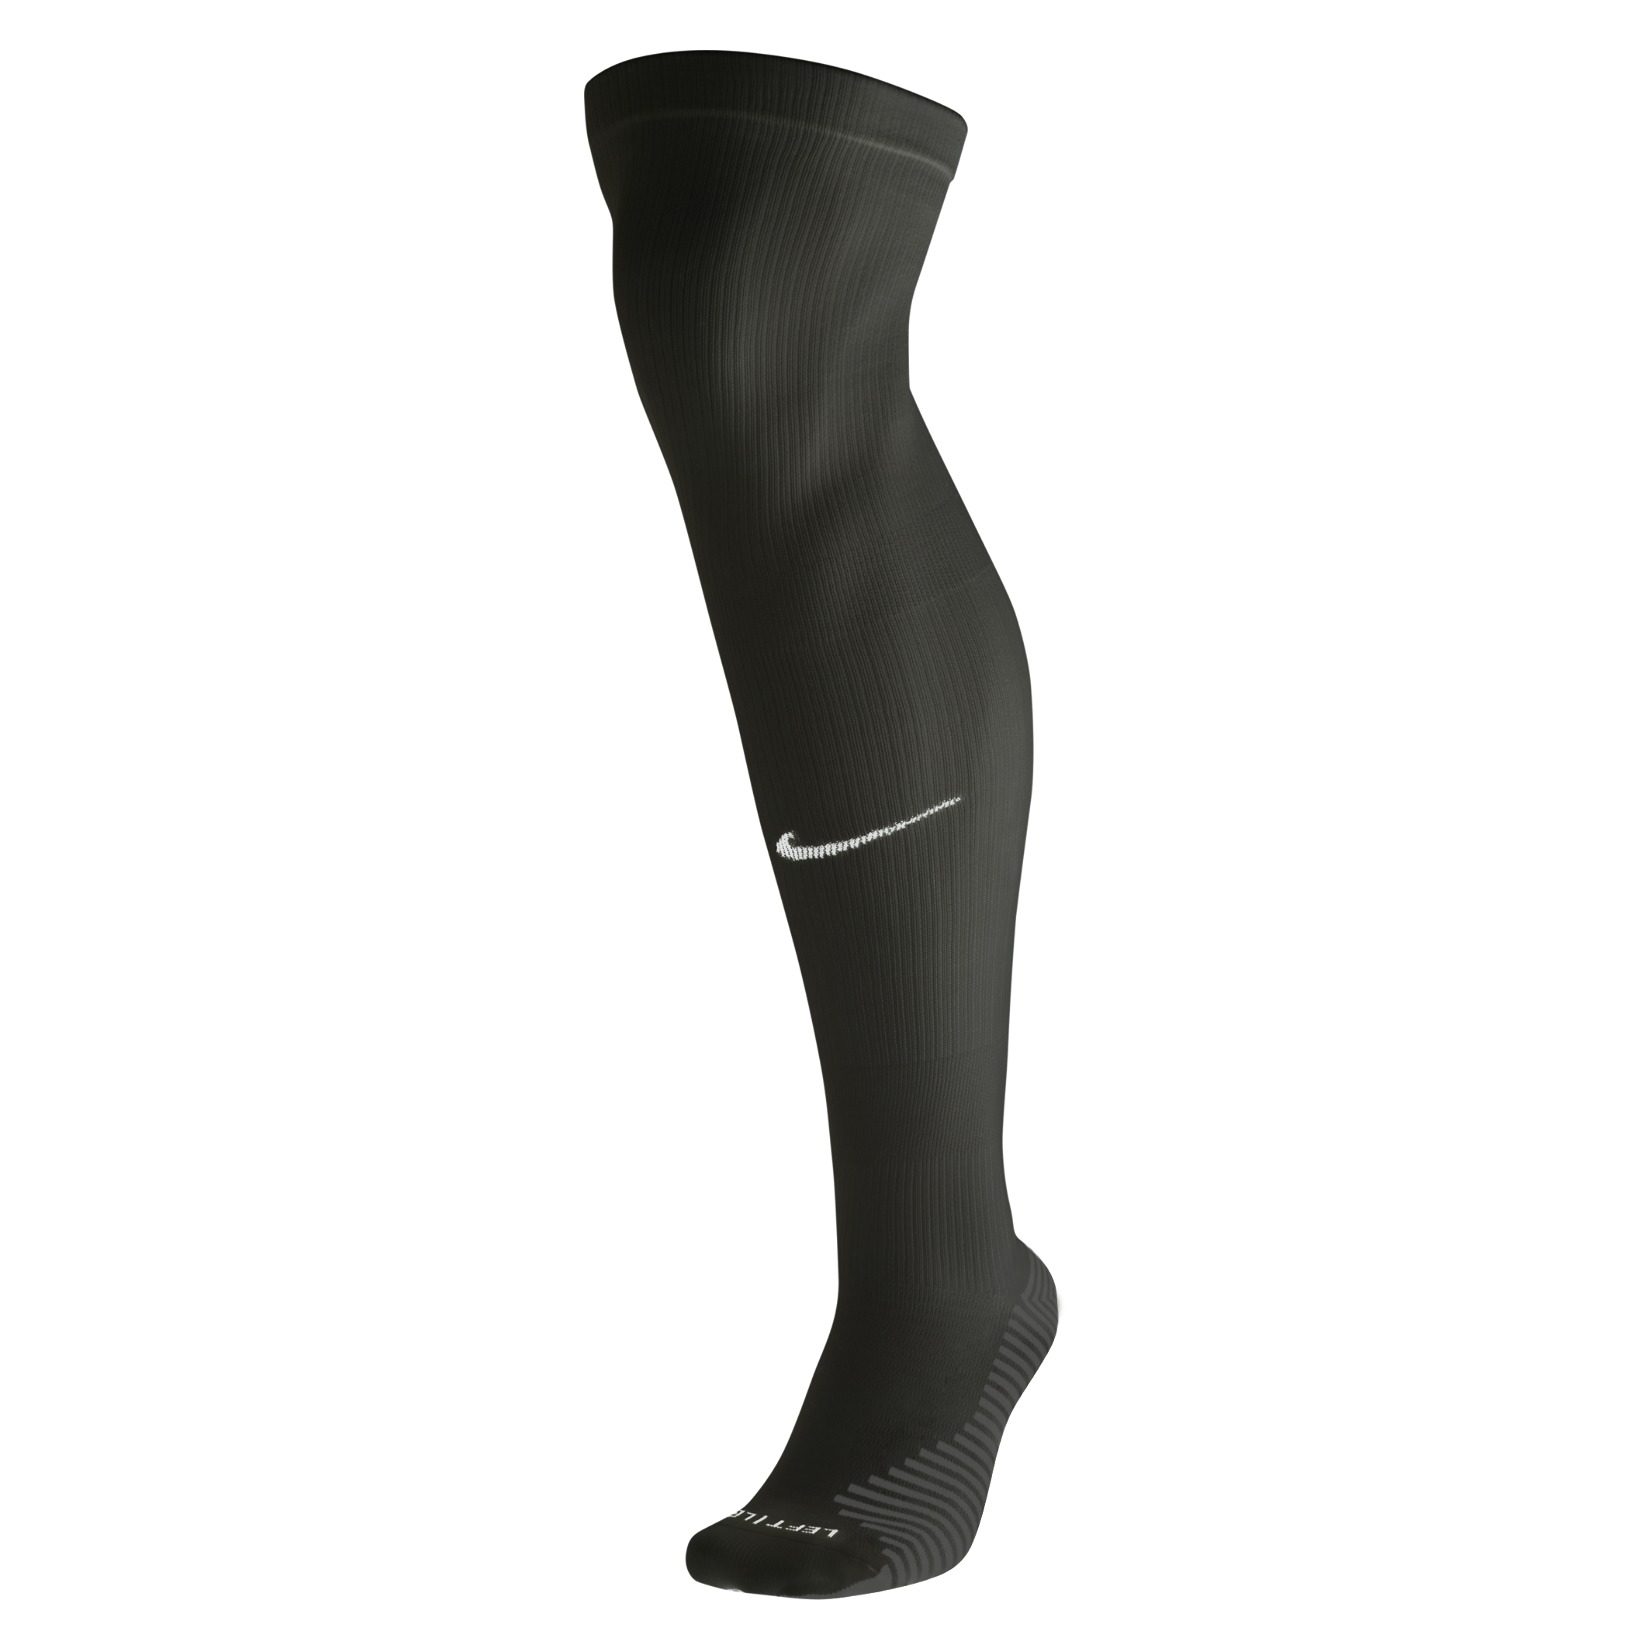 Nike Dri-FIT MatchFit Over-the-Calf Socks